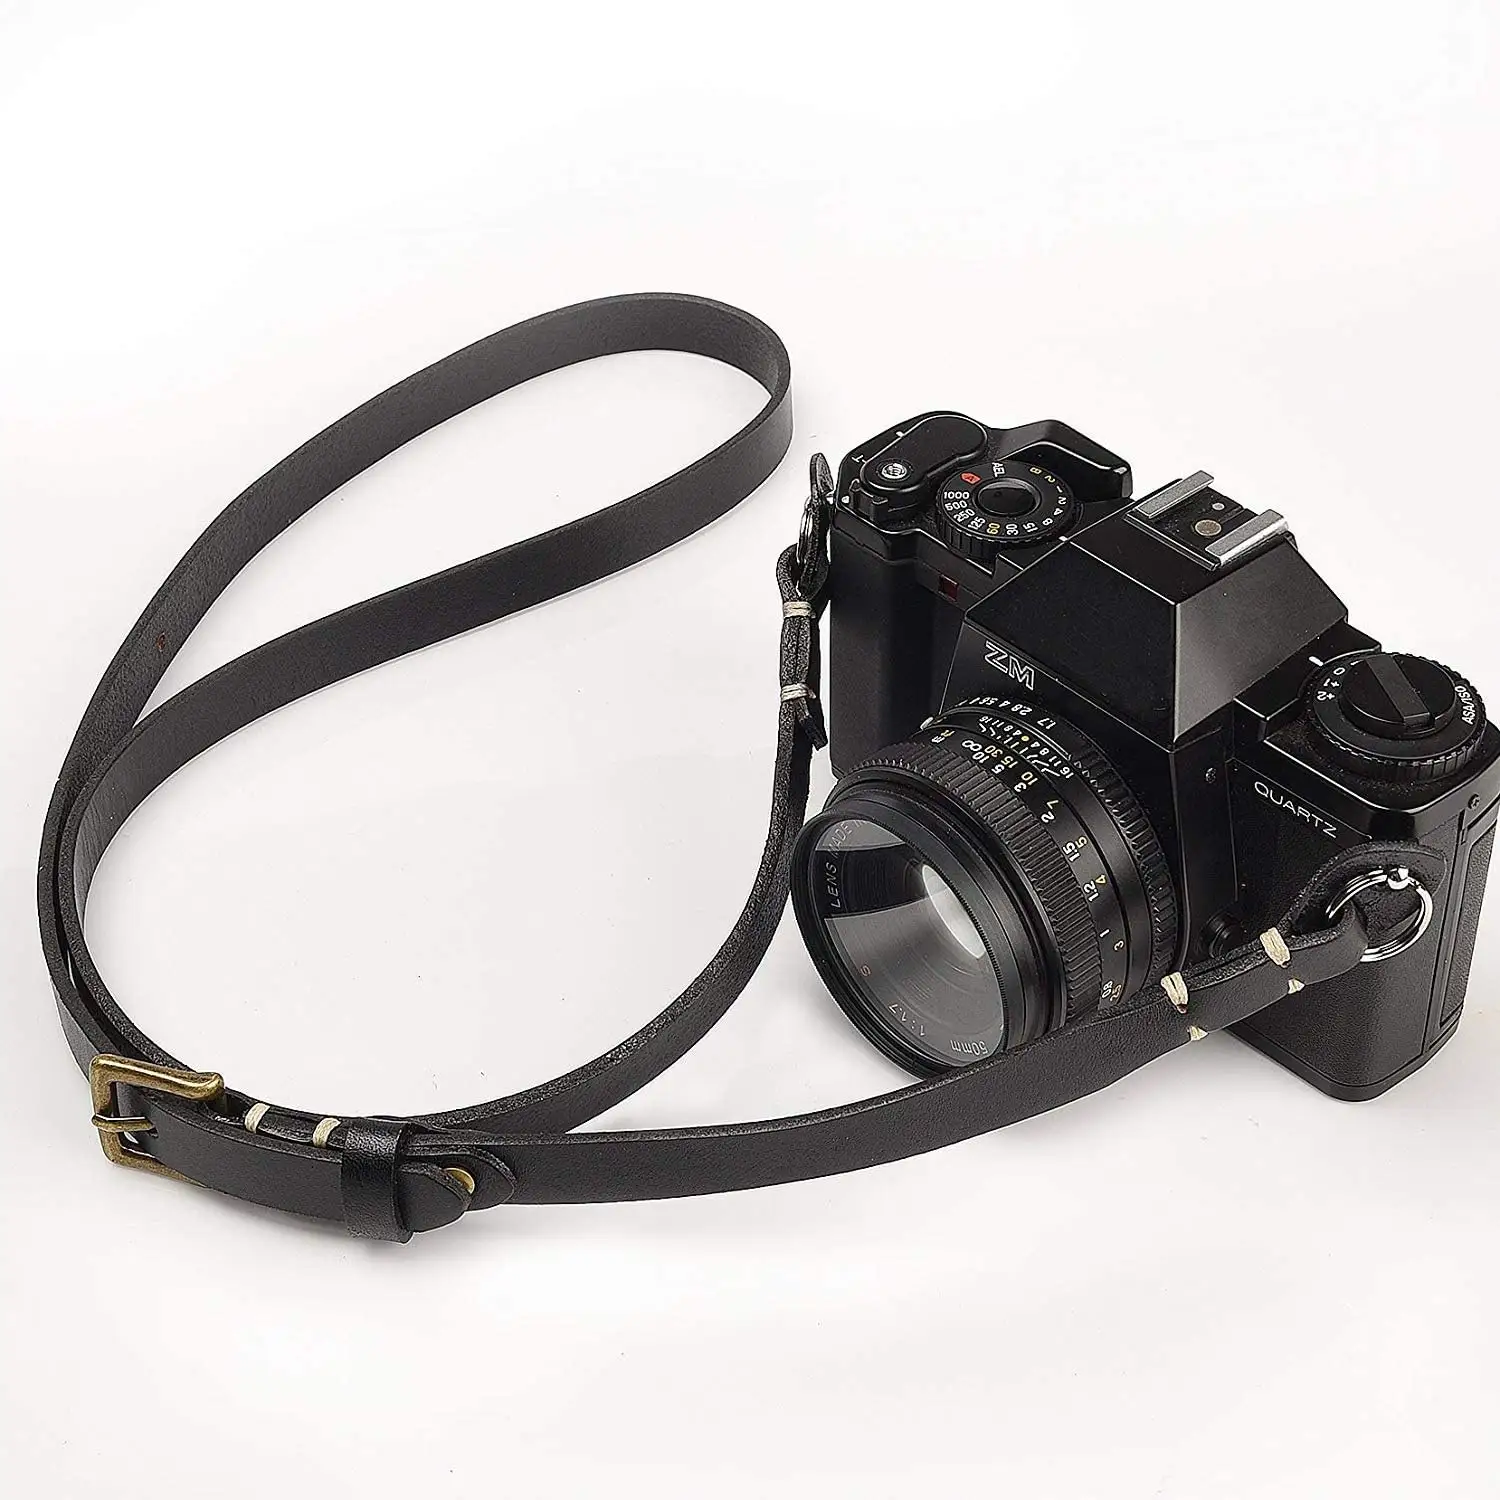 Adjustable Camera Strap Genuine Leather Neck Strap Handmade Compact For SLR & Mirrorless SLR CP006-Black BR8172